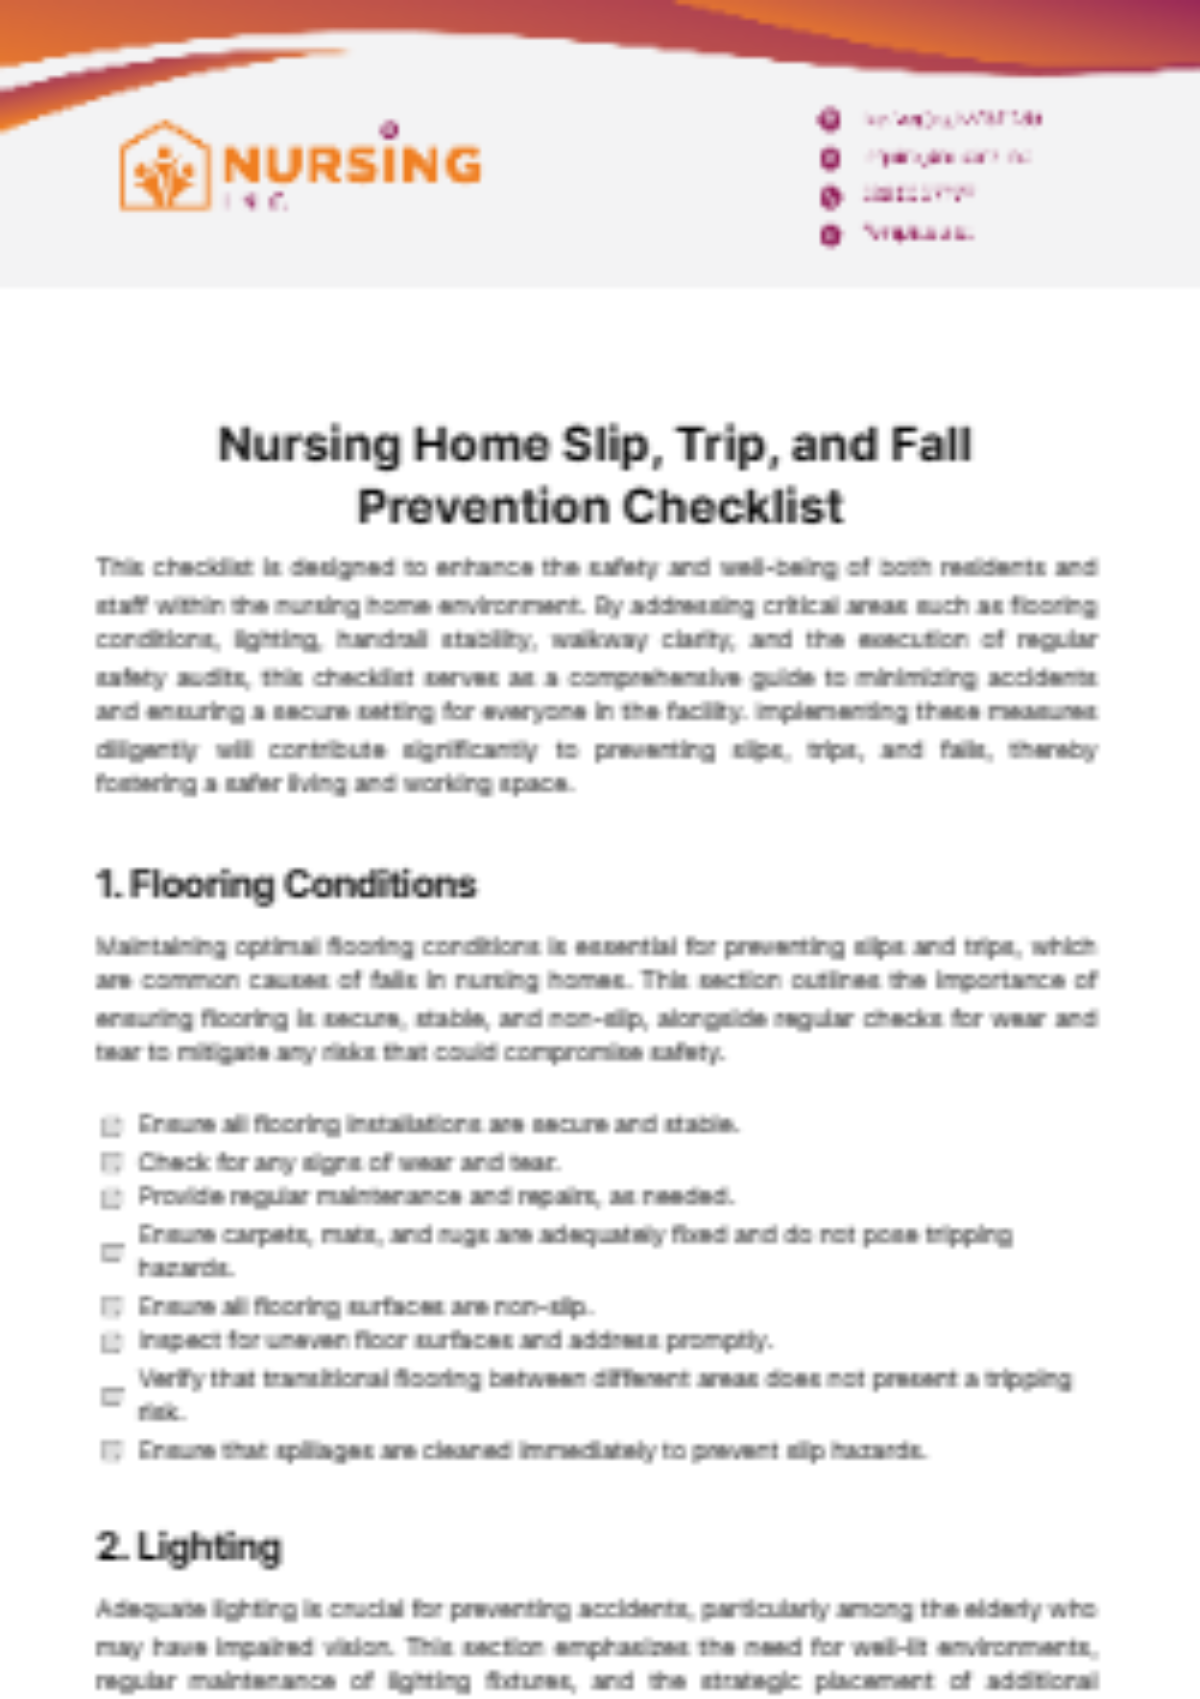 Nursing Home Slip, Trip, and Fall Prevention Checklist Template